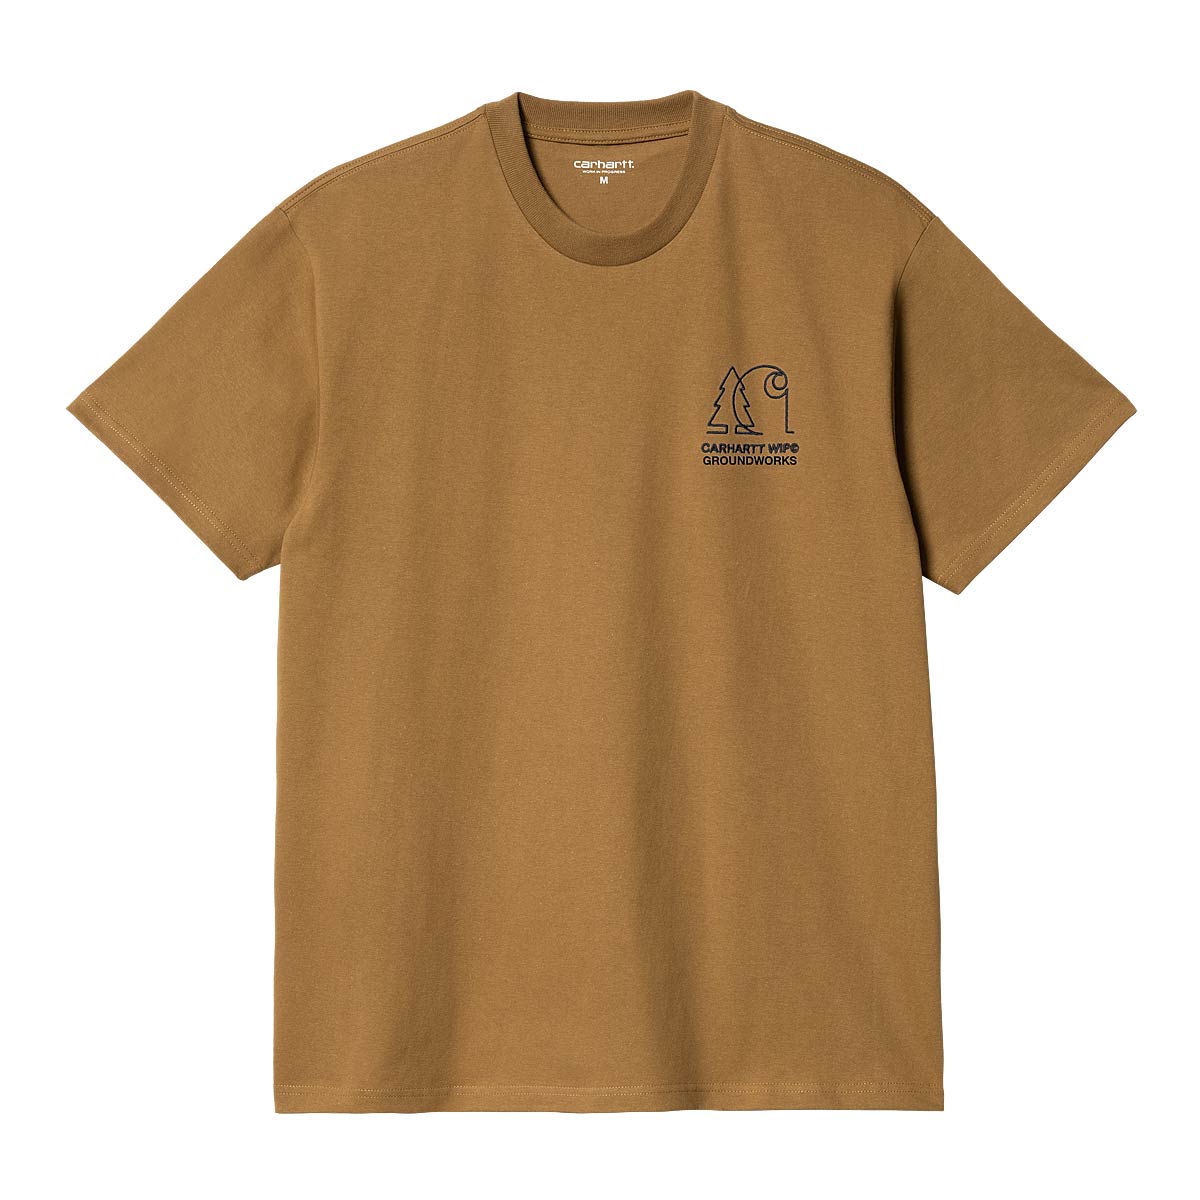 Carhartt Wip Groundworks T-shirt, Brown M